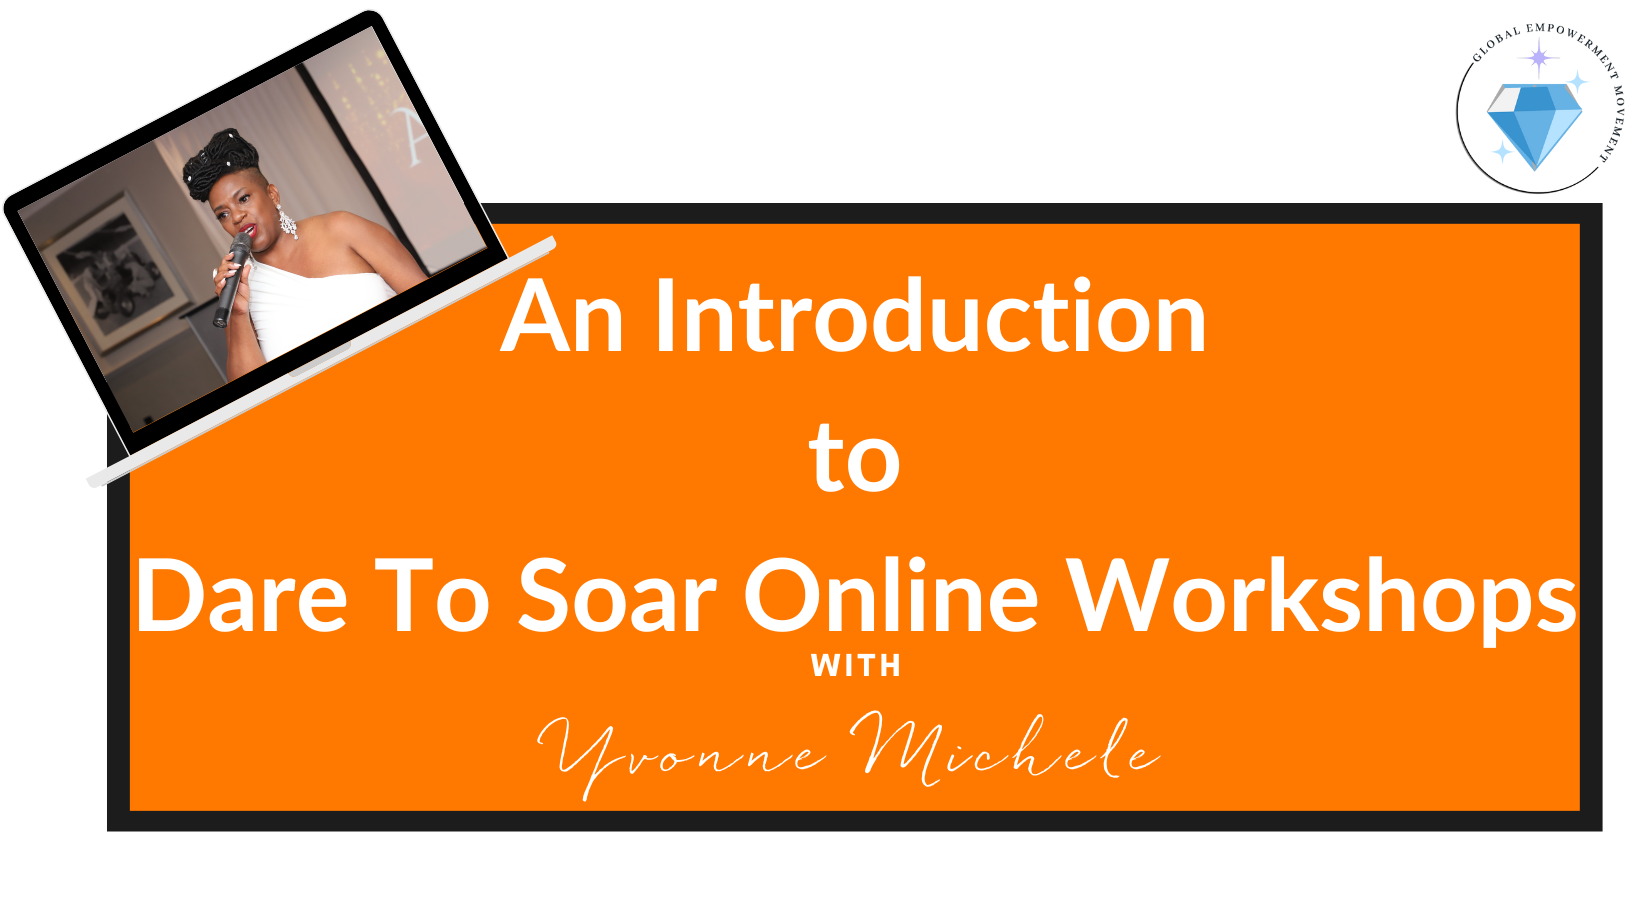 Dare to Soar online workshops - starting in November